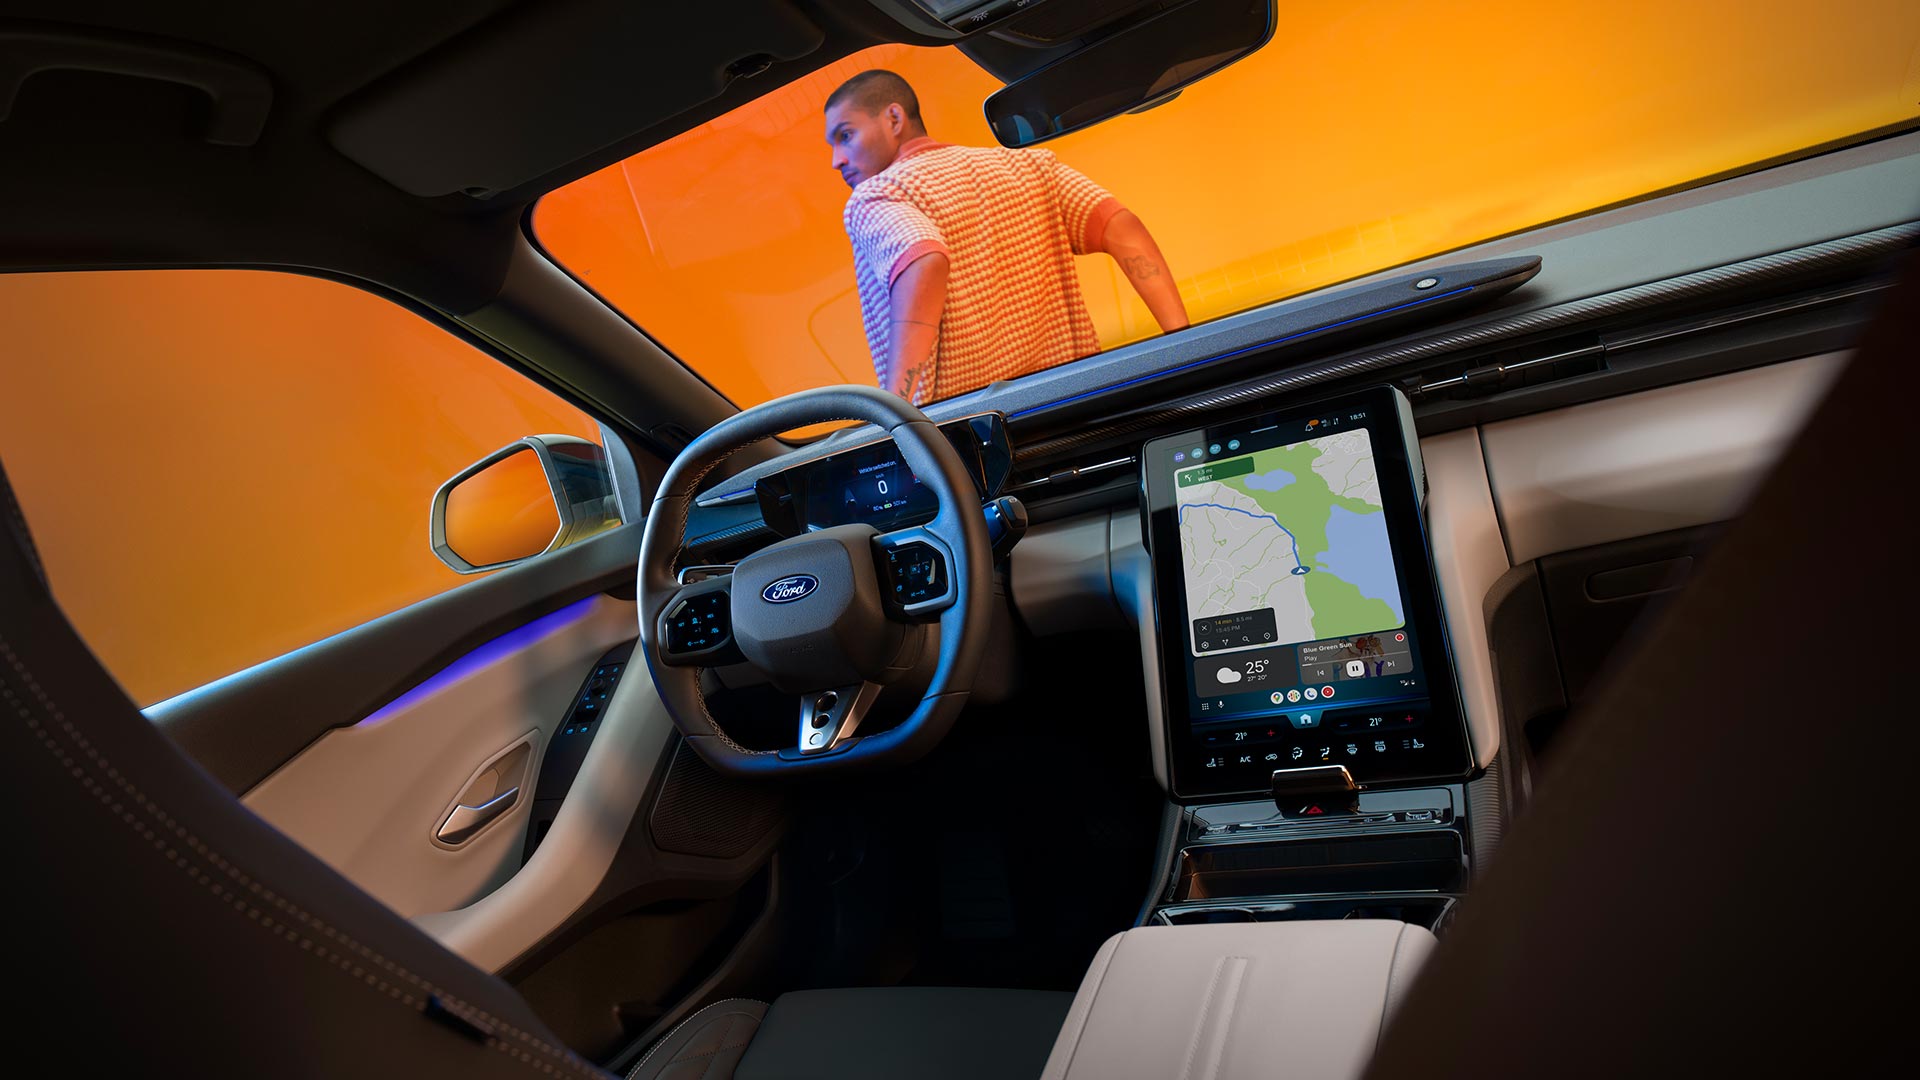 Noul interior al Ford Capri® electric, cu ecran tactil mare și sistem de navigație prin satelit conectat la Cloud.